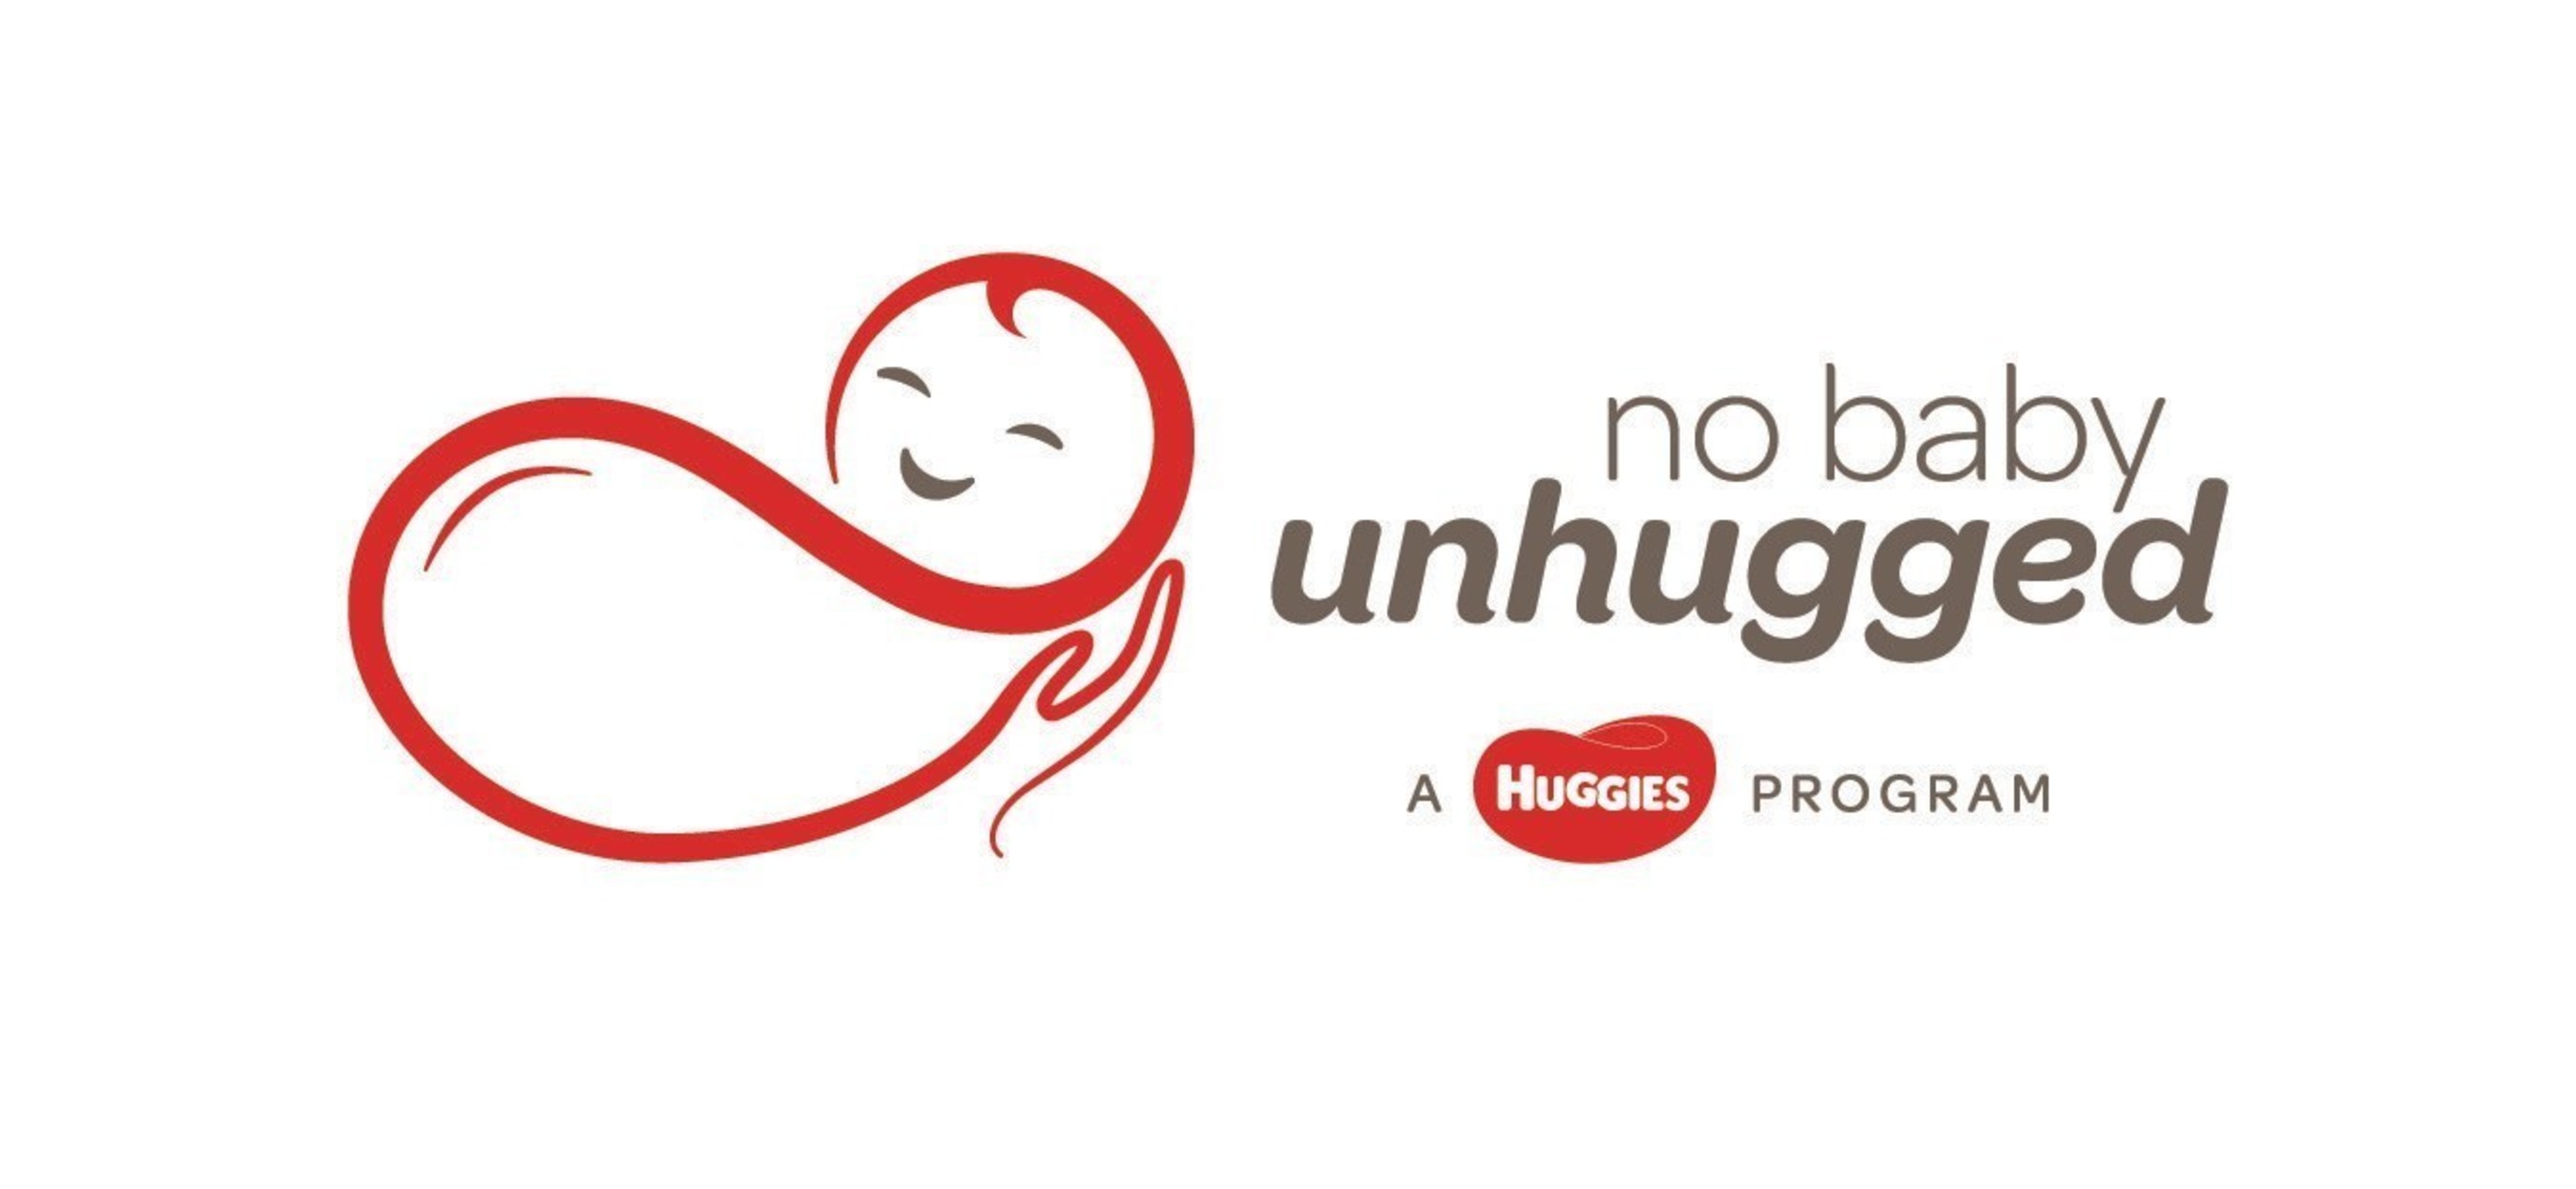 Huggies(R) No Baby Unhugged